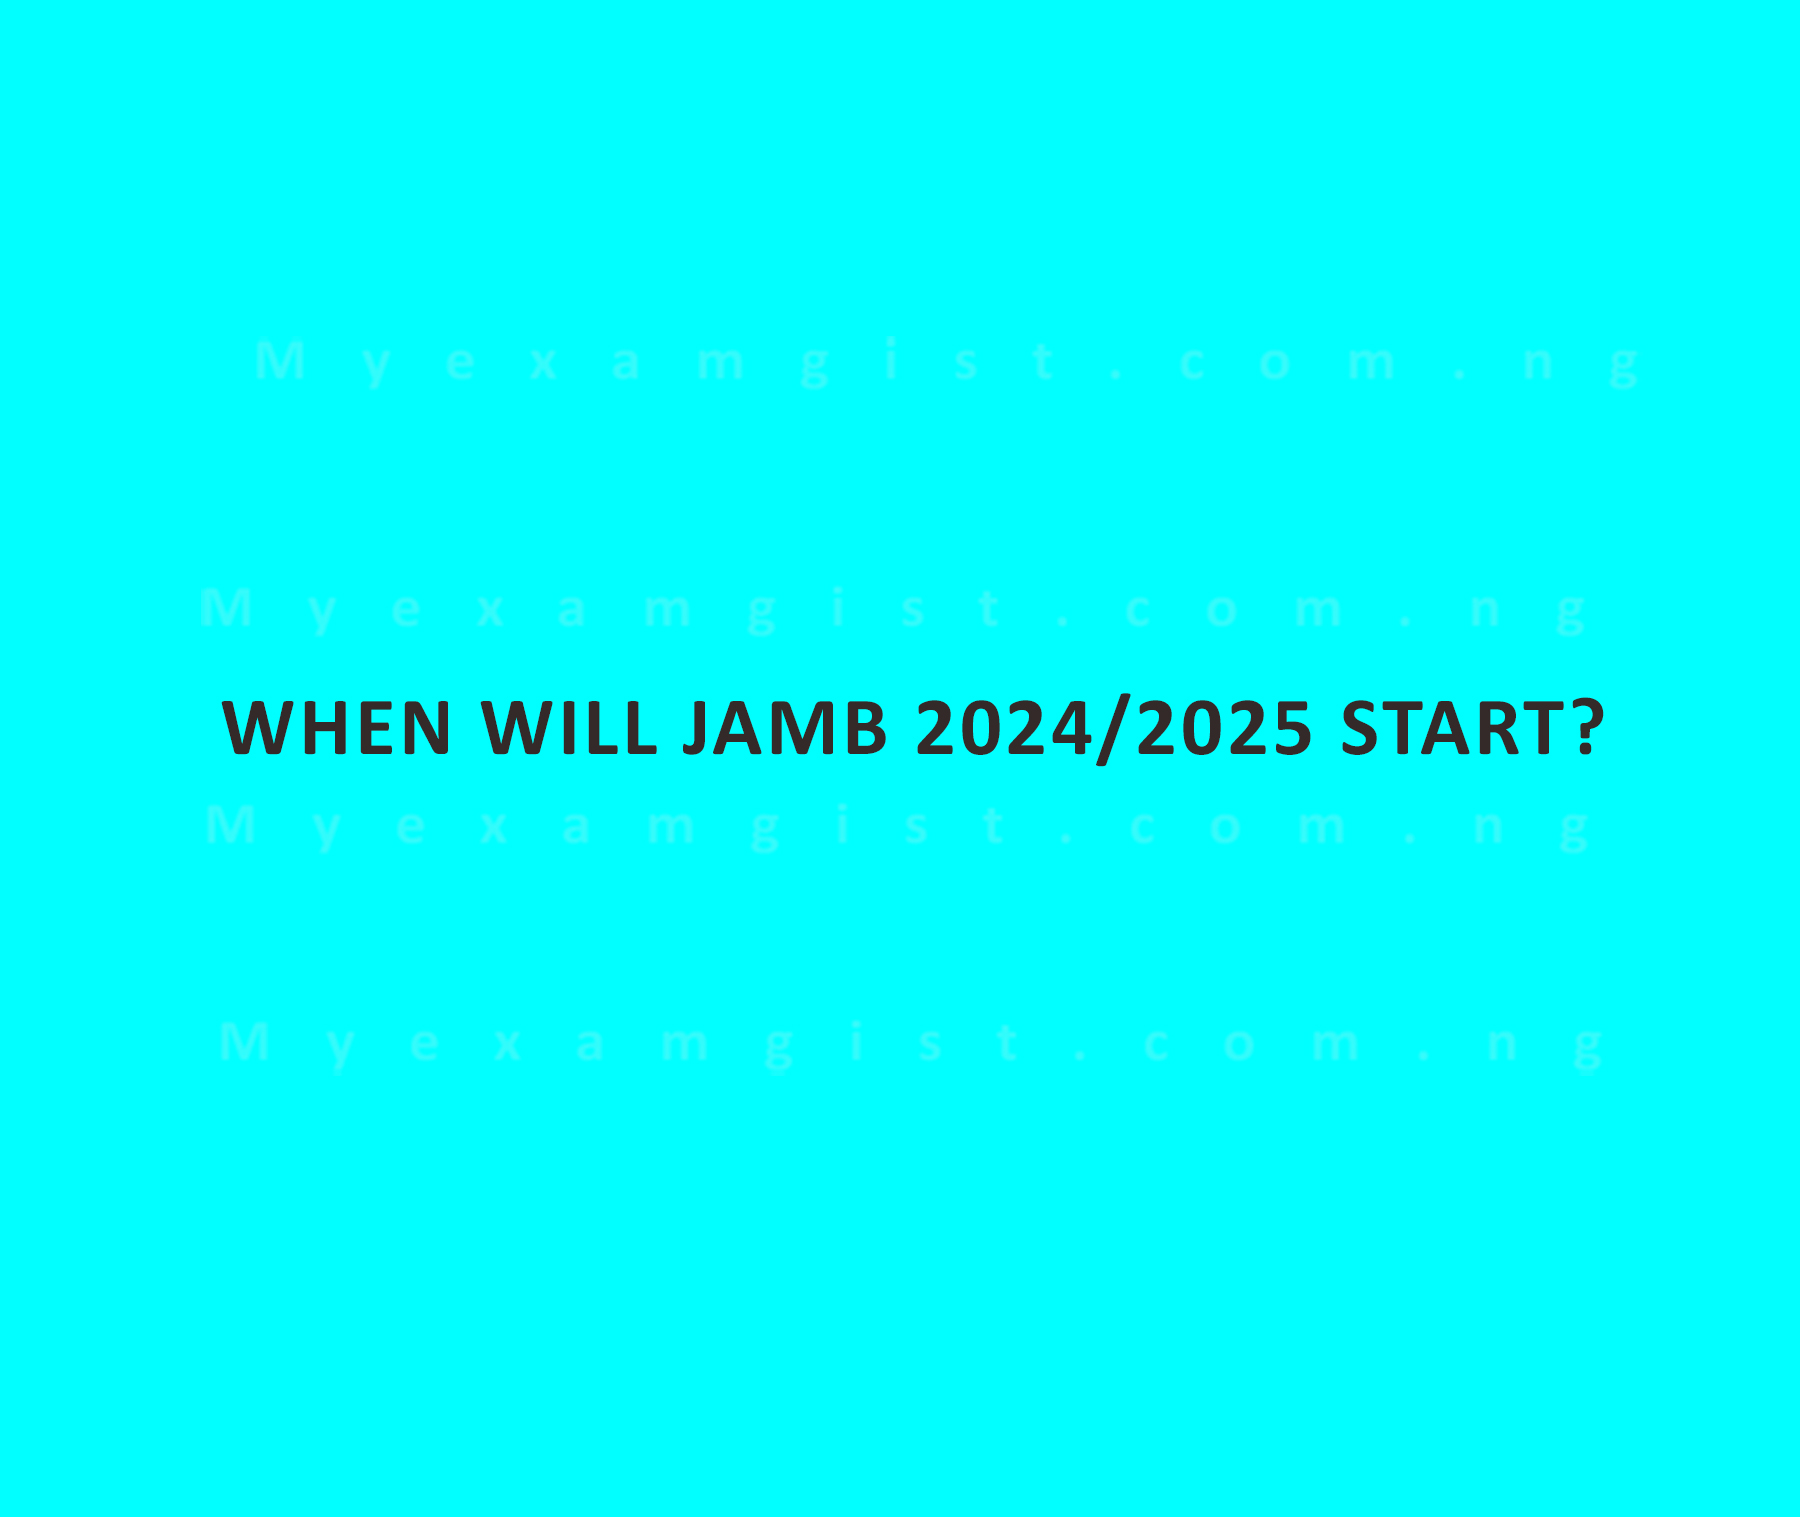 When will JAMB 2024/2025 start?